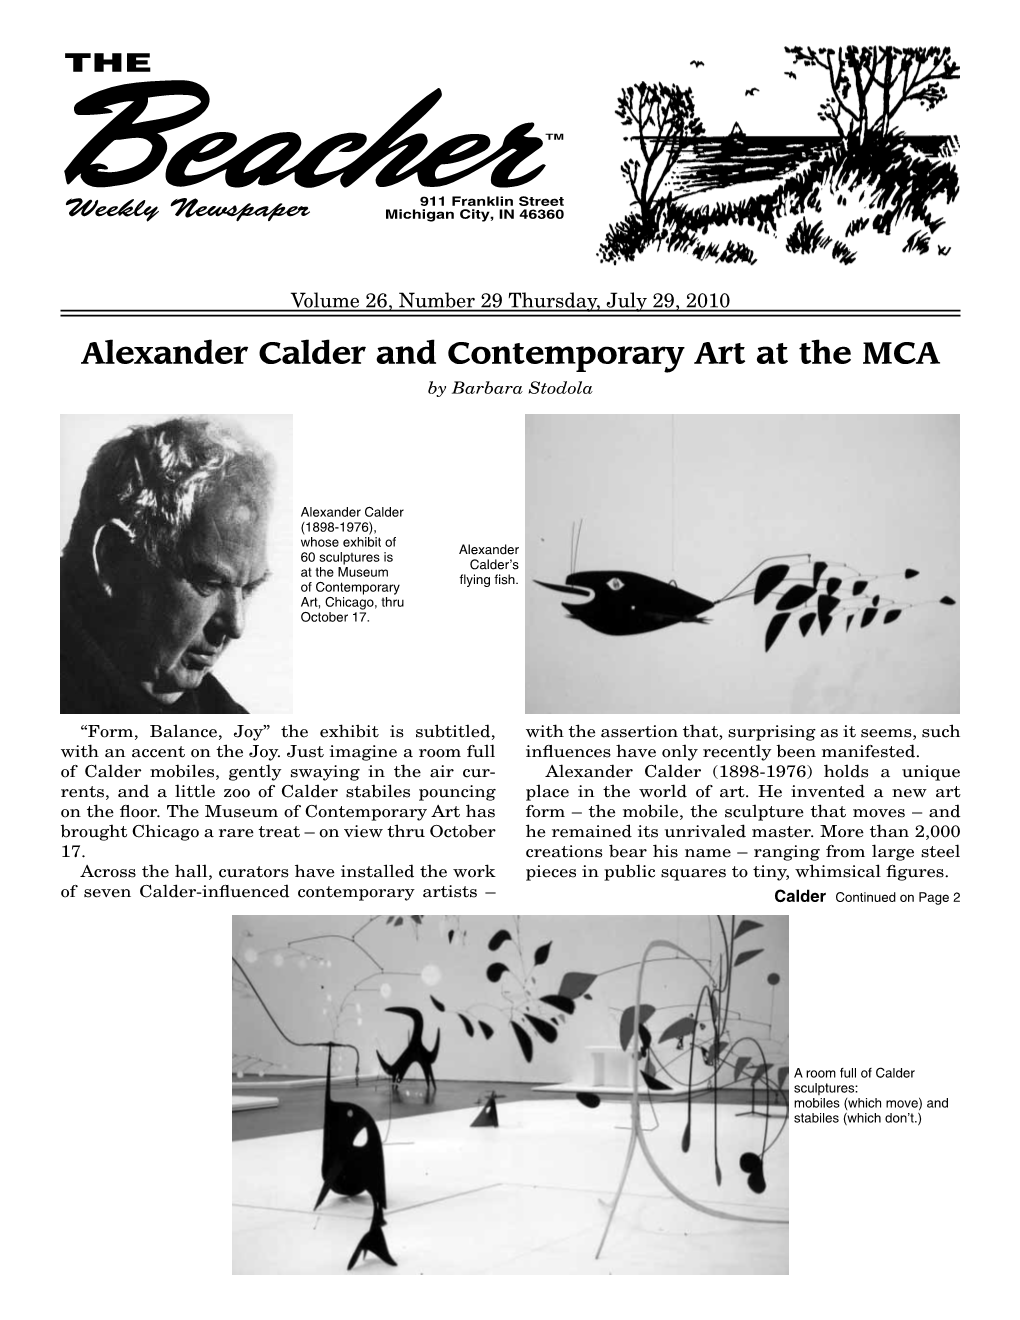 Alexander Calder and Contemporary Art at the MCA by Barbara Stodola